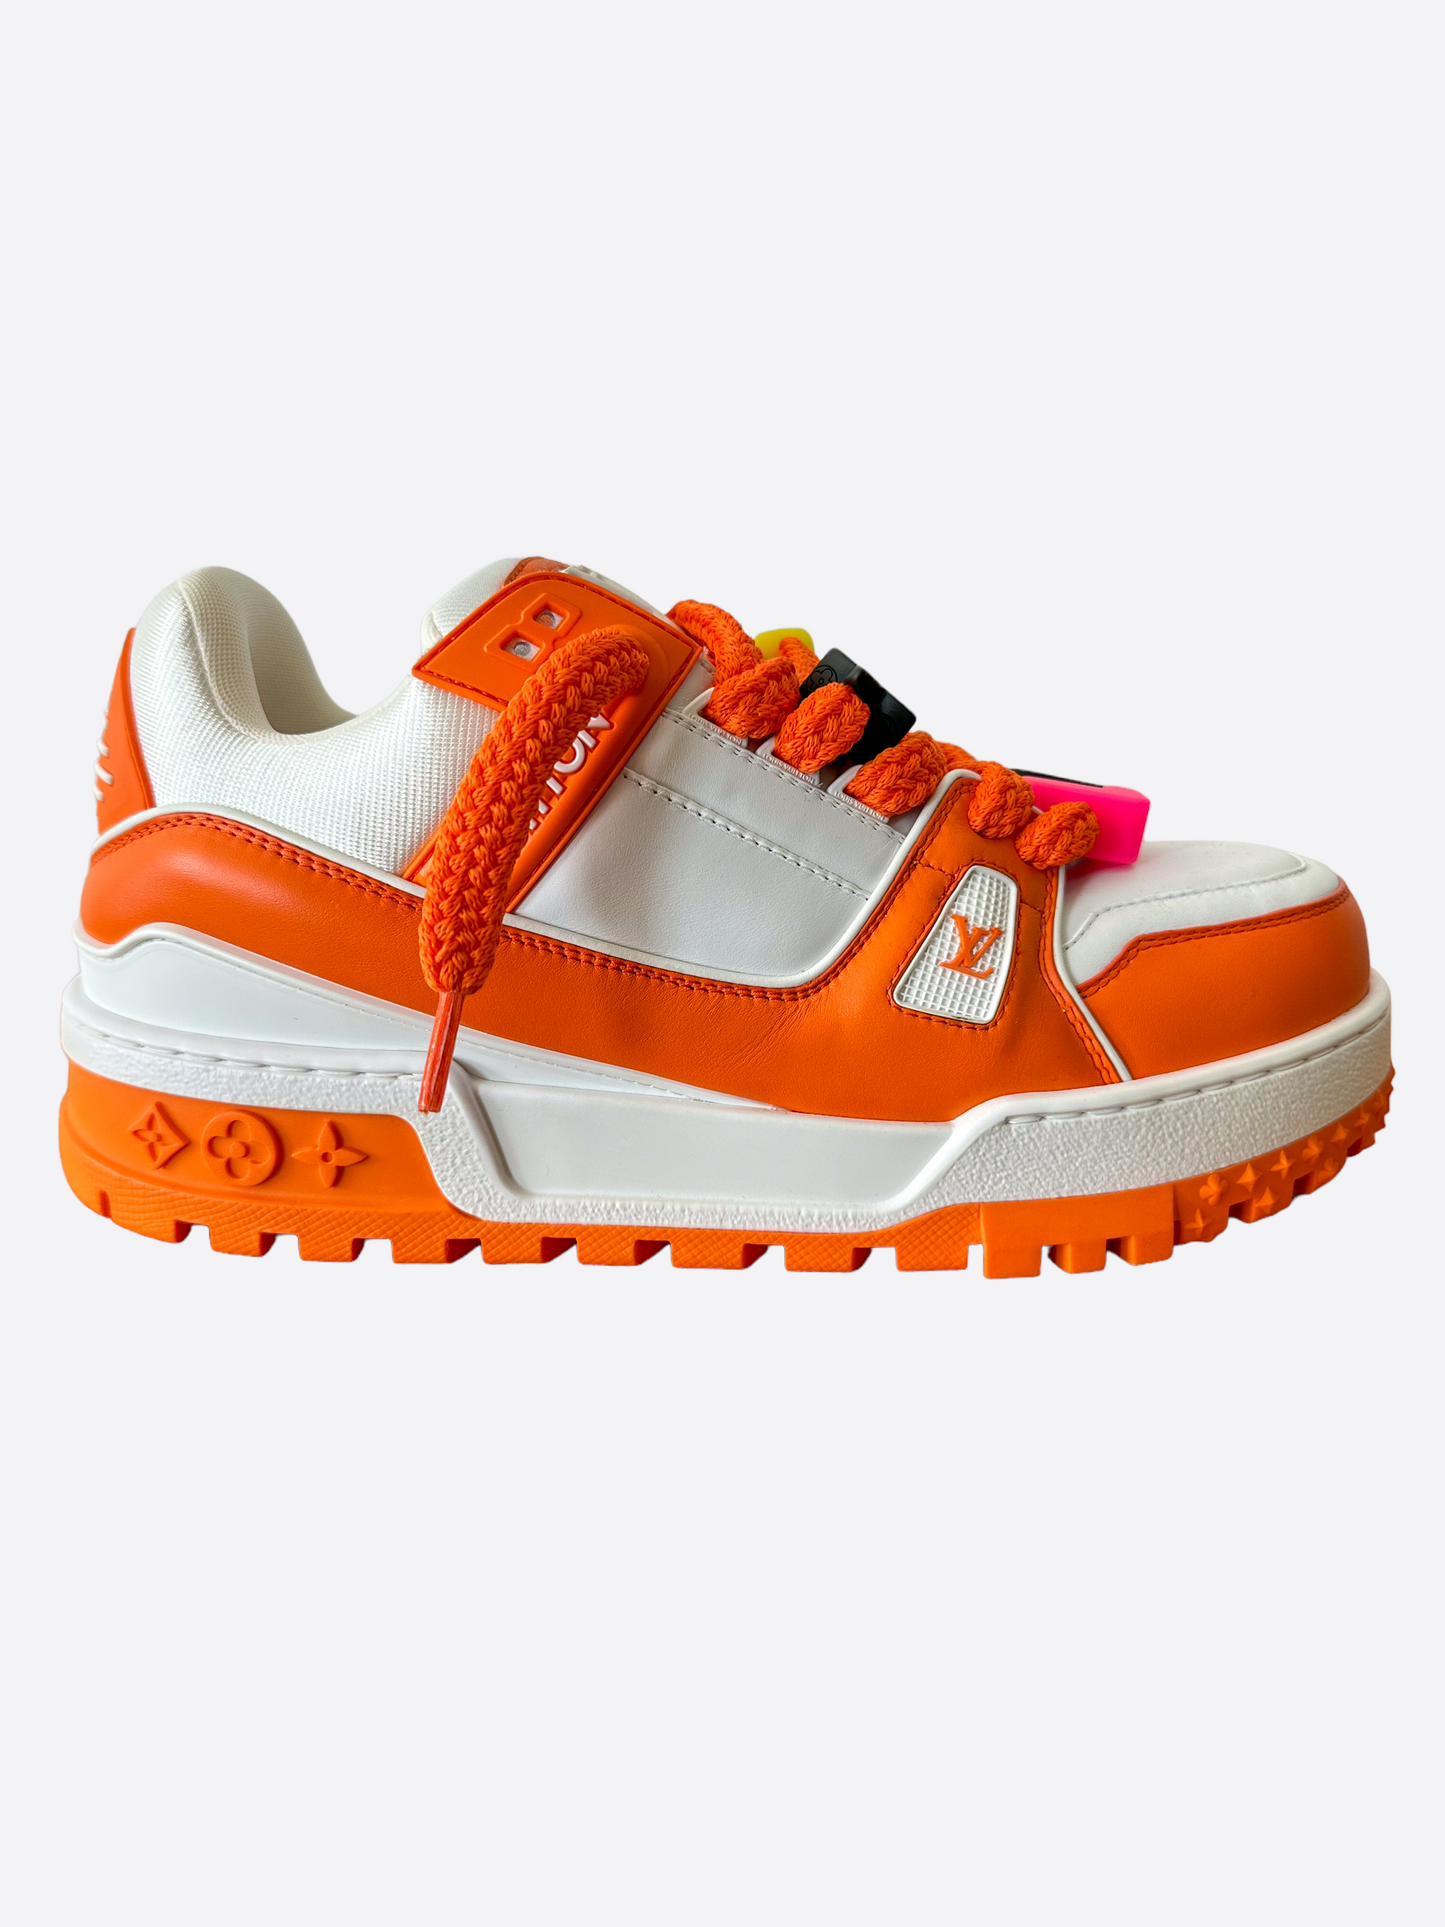 Louis Vuitton Run Away Monogram Tri Color Trainer Sneakers Size